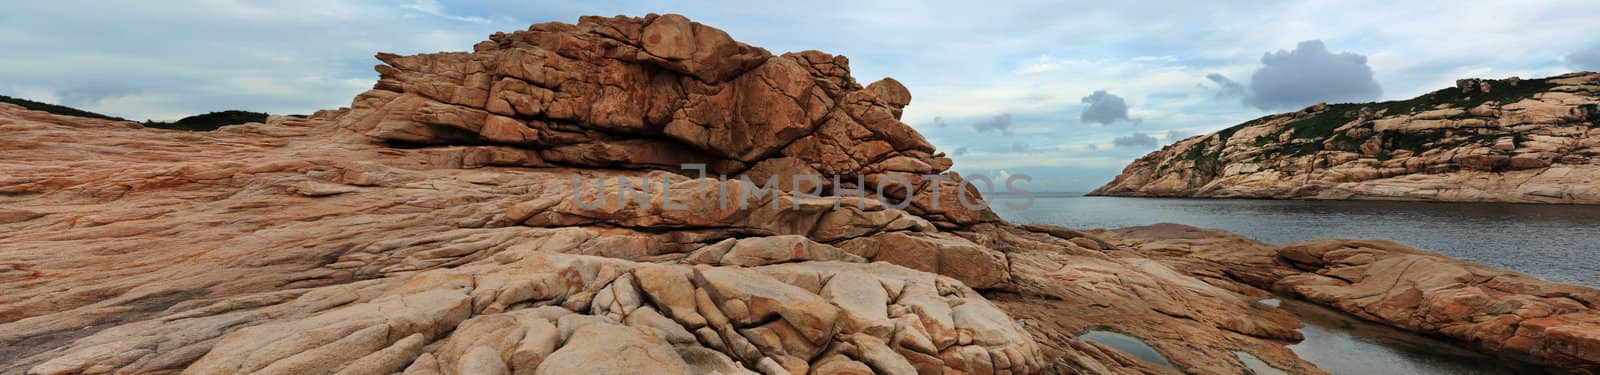 rock coast by leungchopan